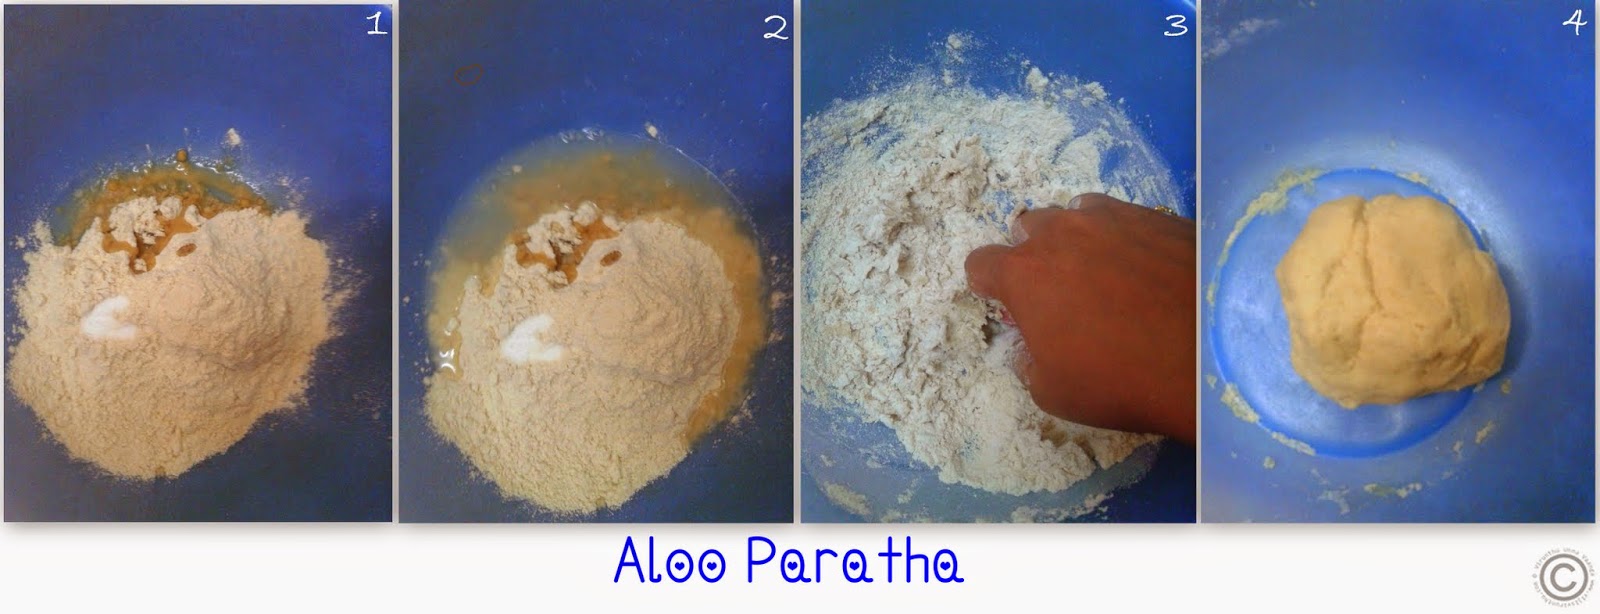 Aloo-paratha-recipe